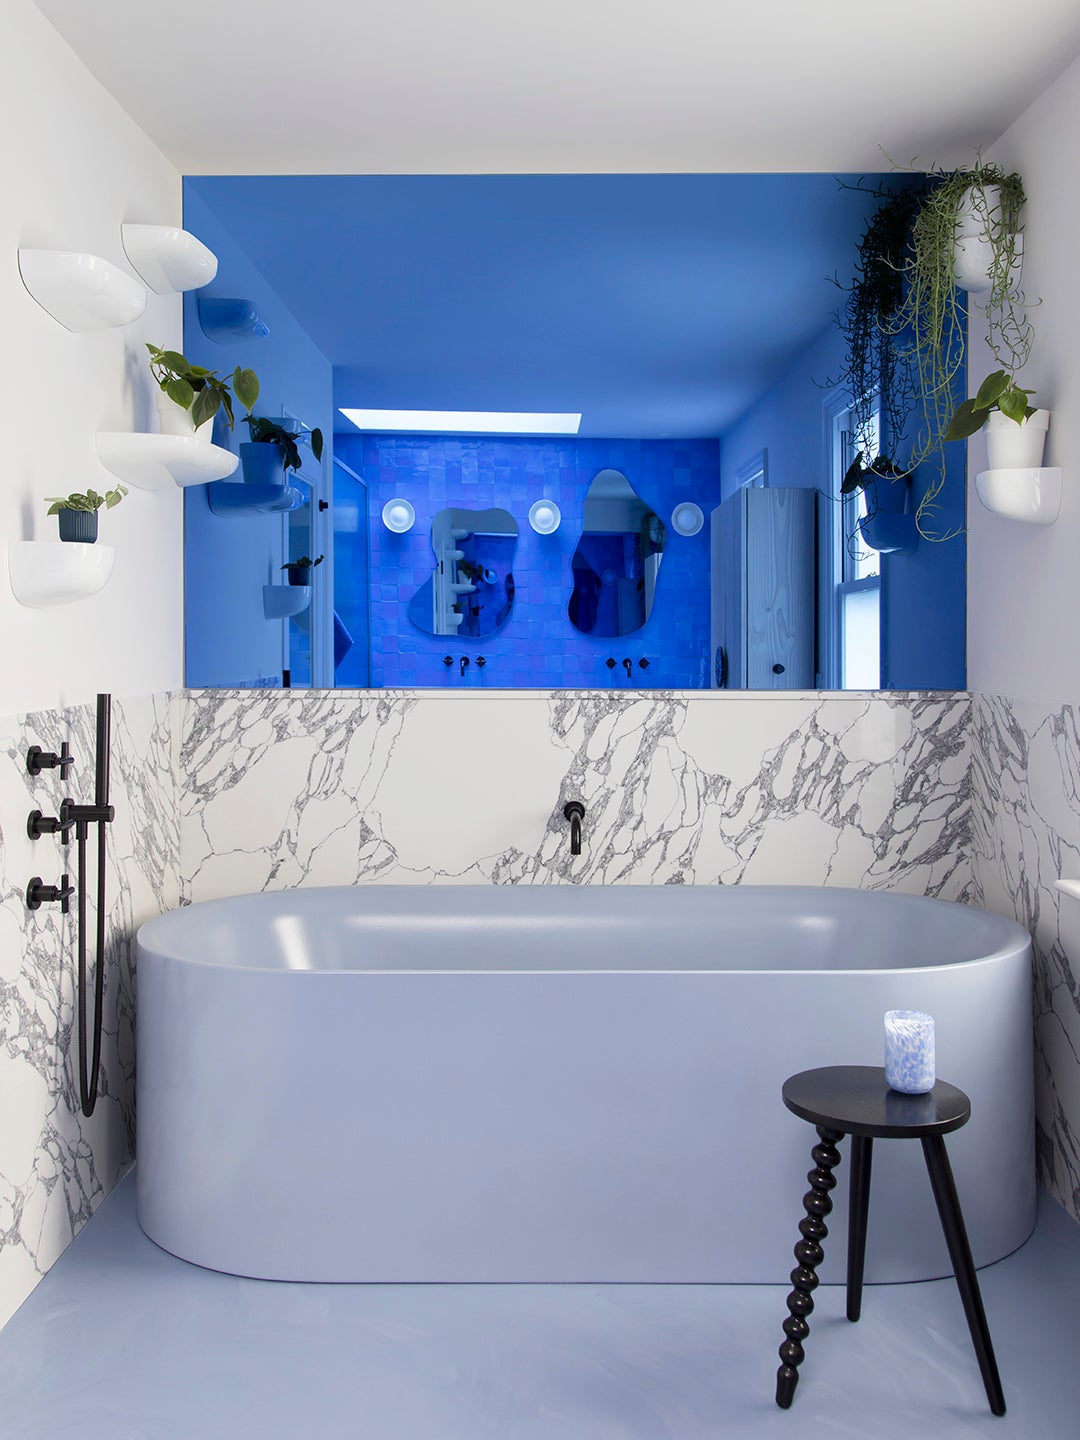 Blue tiled bathroom with blue freestanding tub.